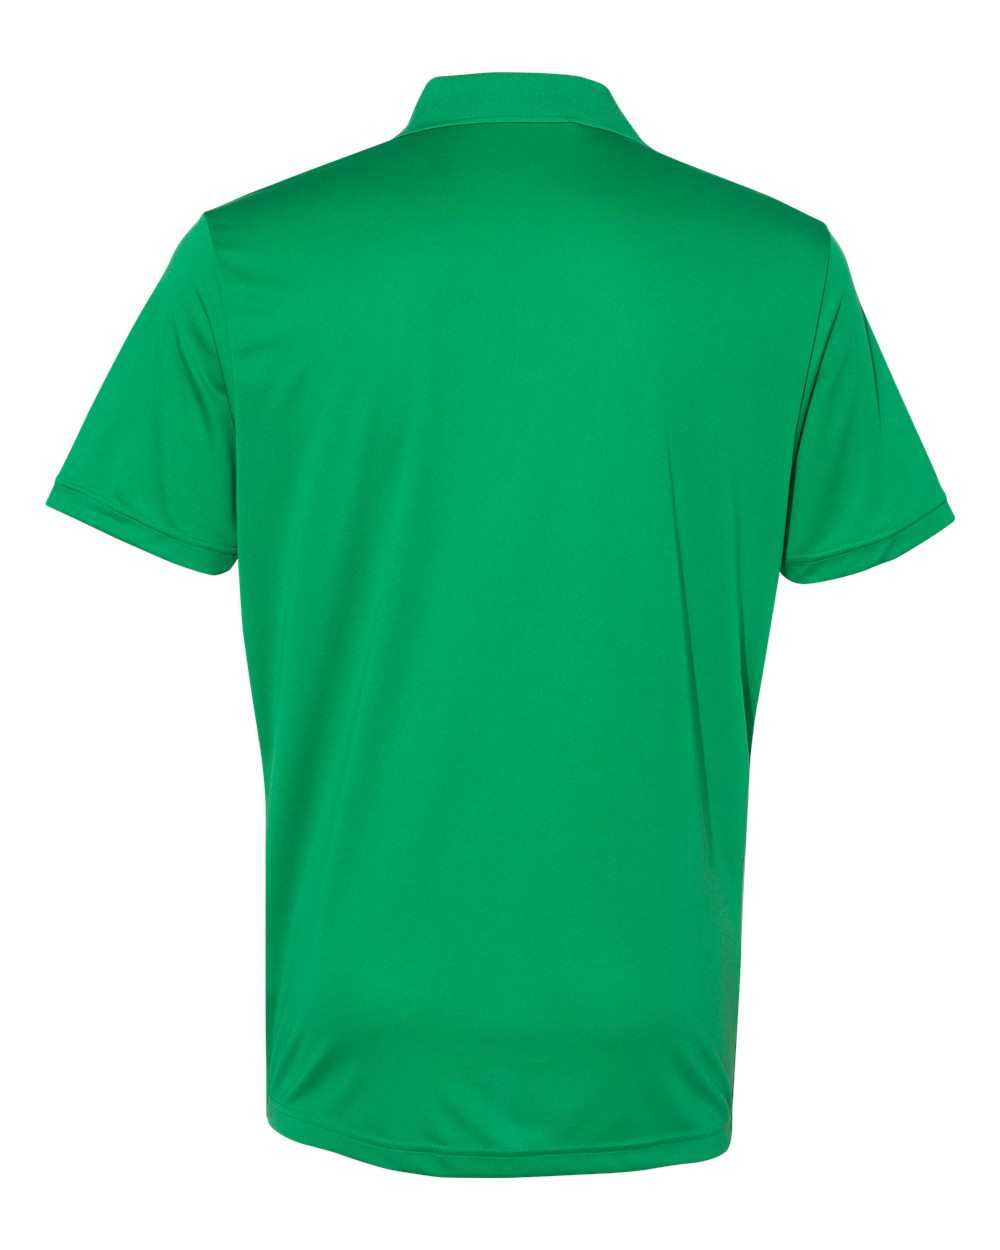 Adidas A230 Performance Sport Shirt - Green - HIT a Double